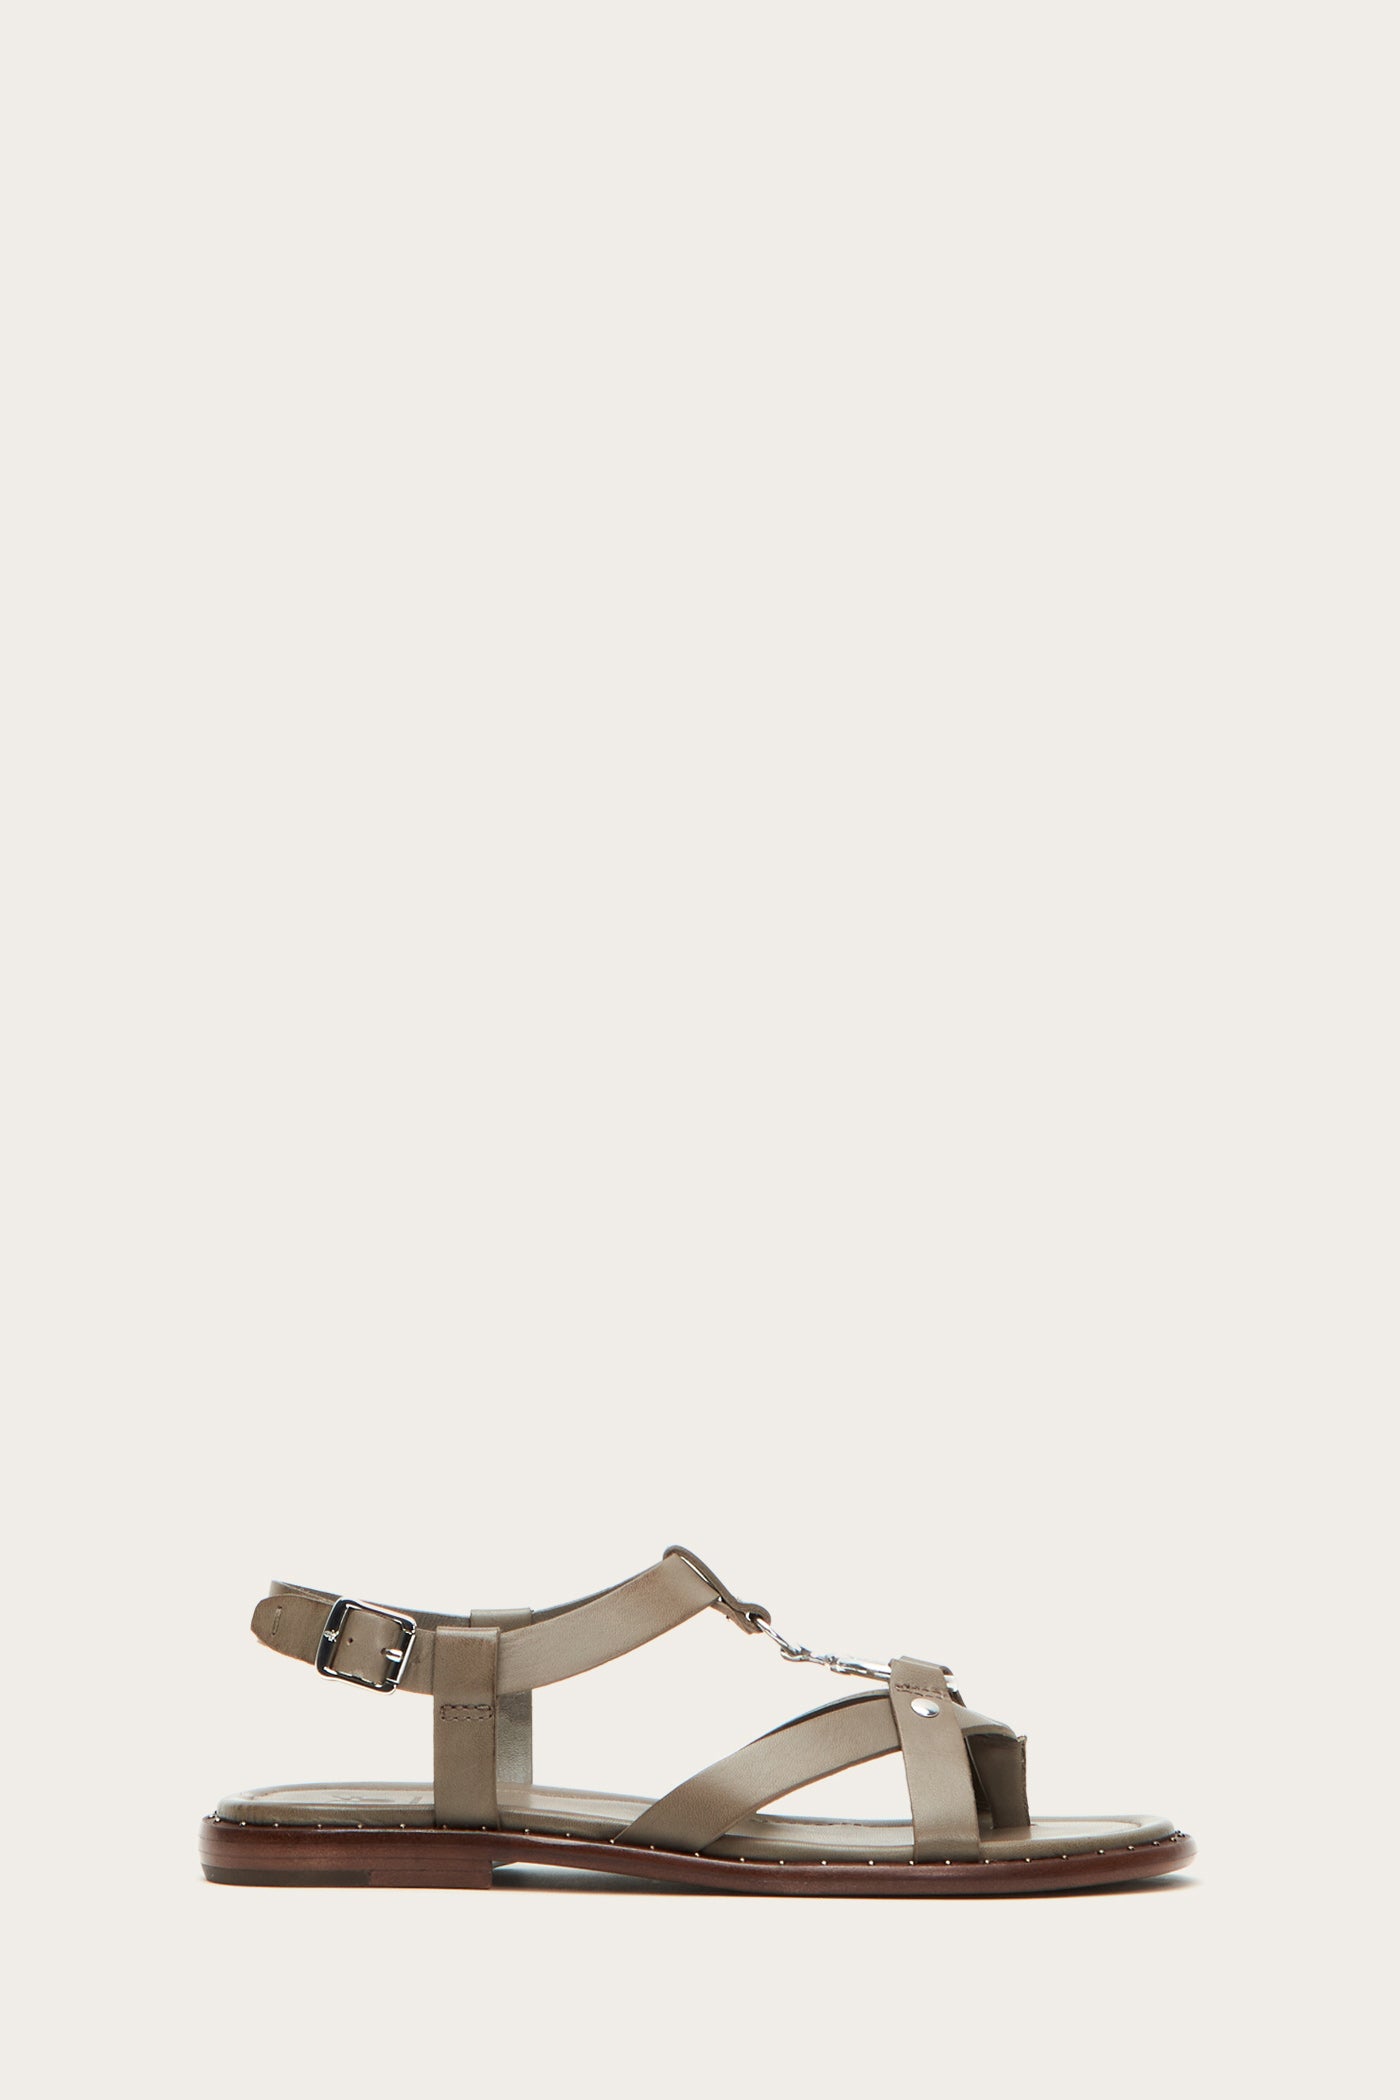 frye blair harness sandal